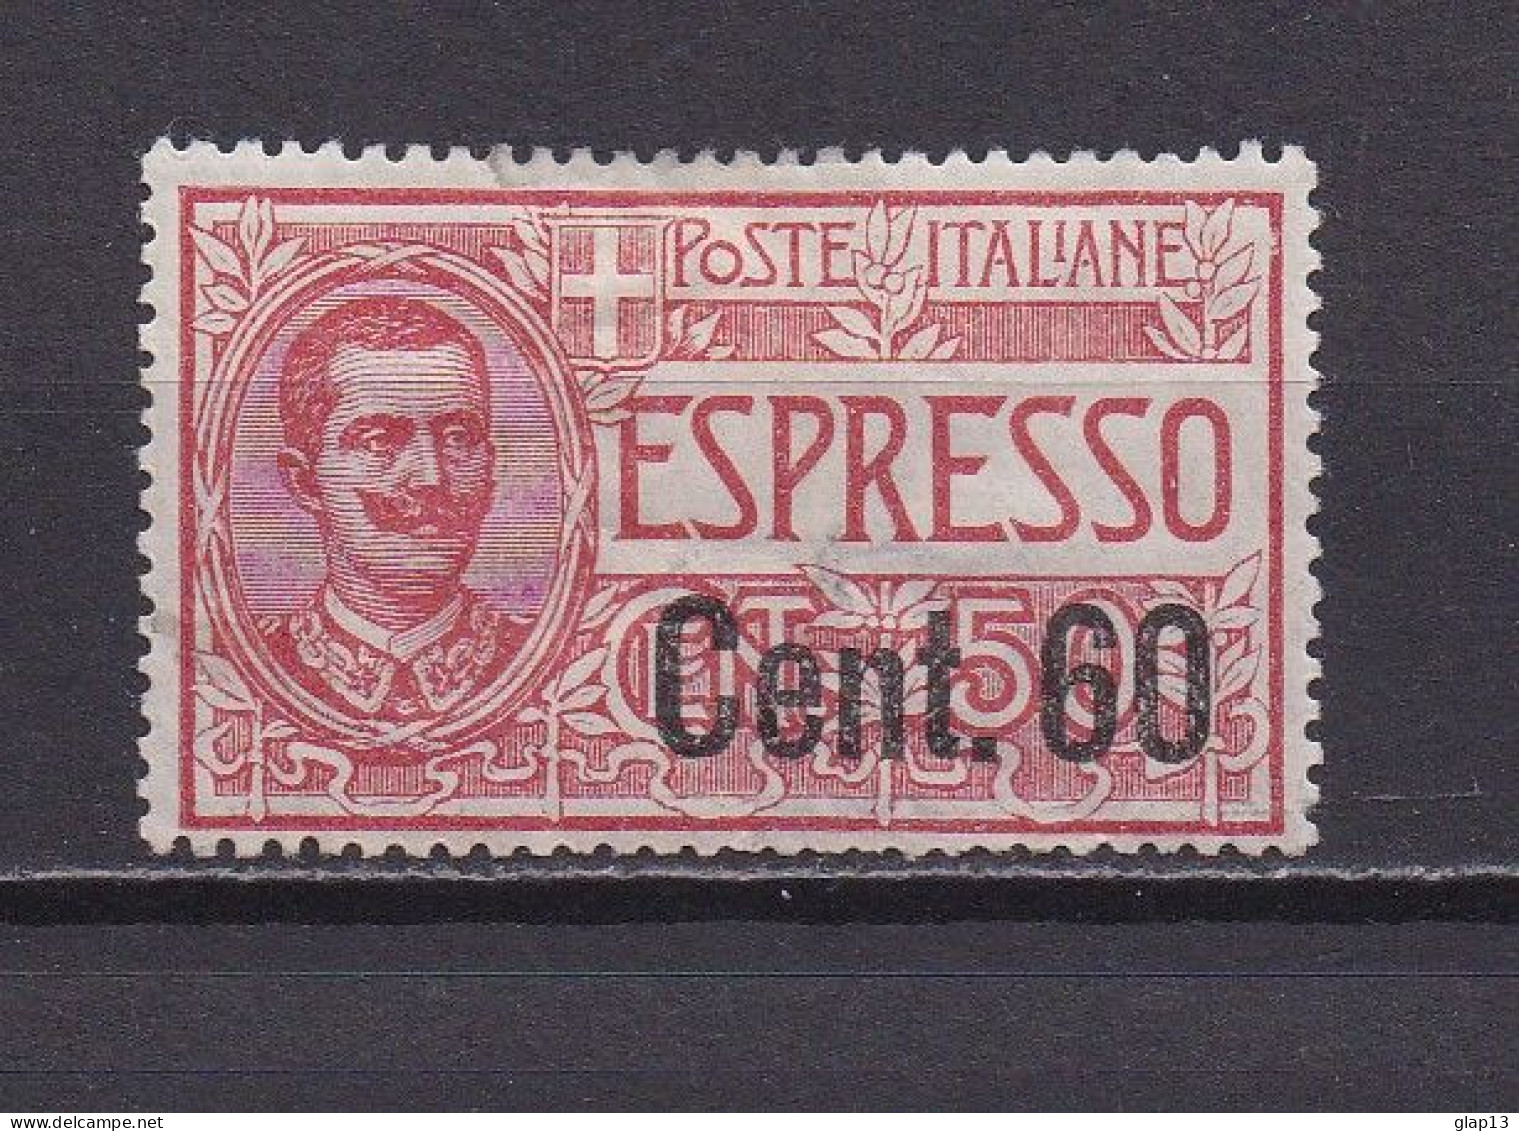 ITALIE 1922 EXPRESS N°8 NEUF AVEC CHARNIERE - Correo Urgente/neumático